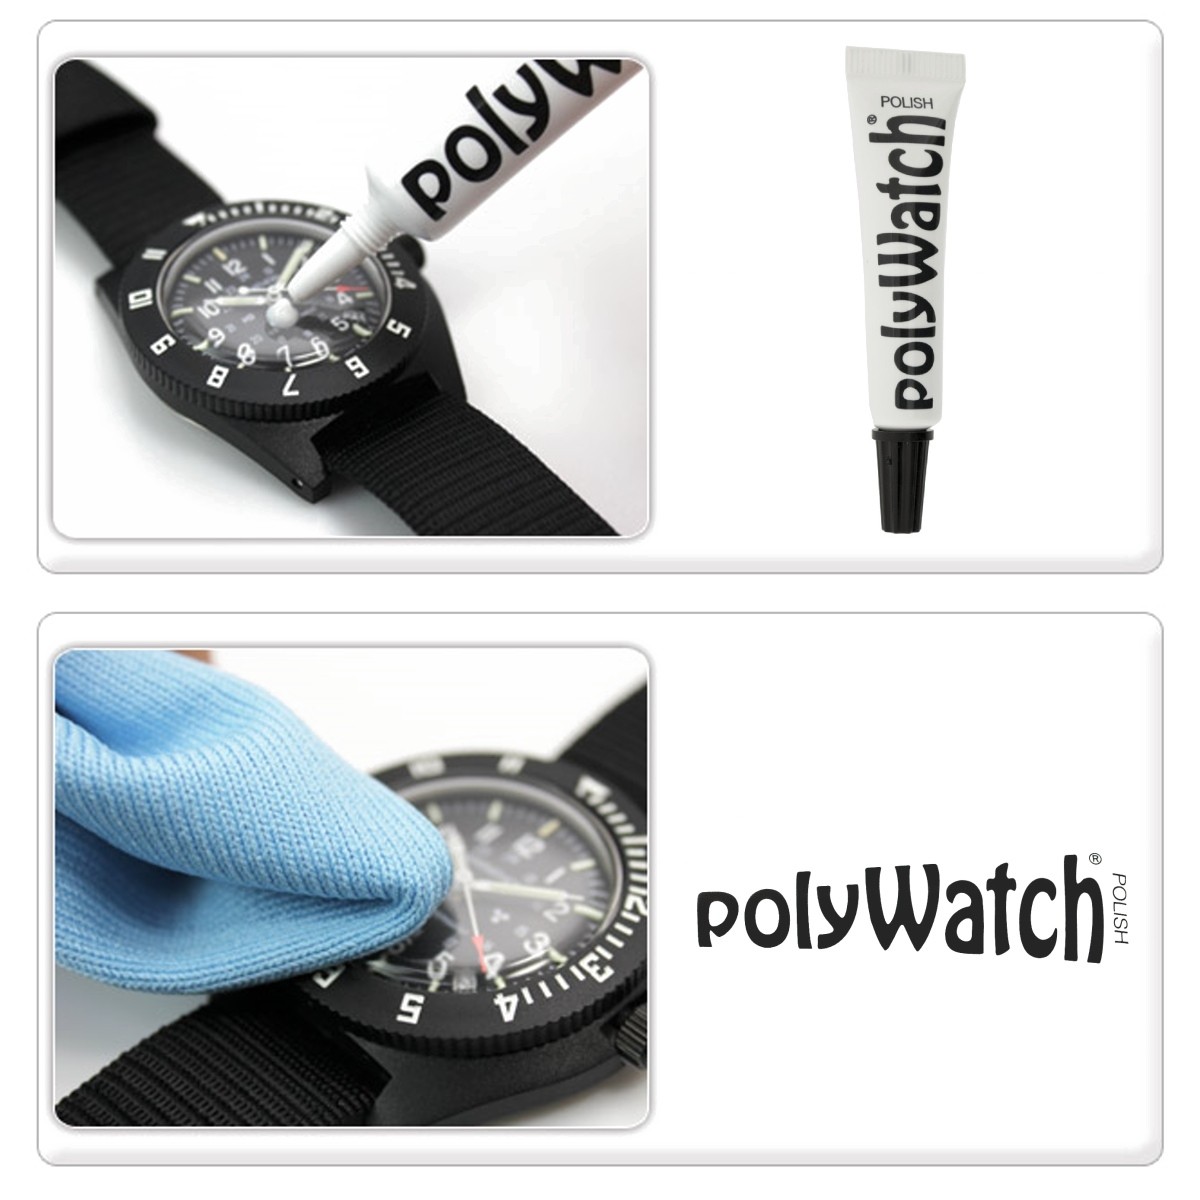 Watch Glass Polish Polywatch, Watch Repair Tools Polishing